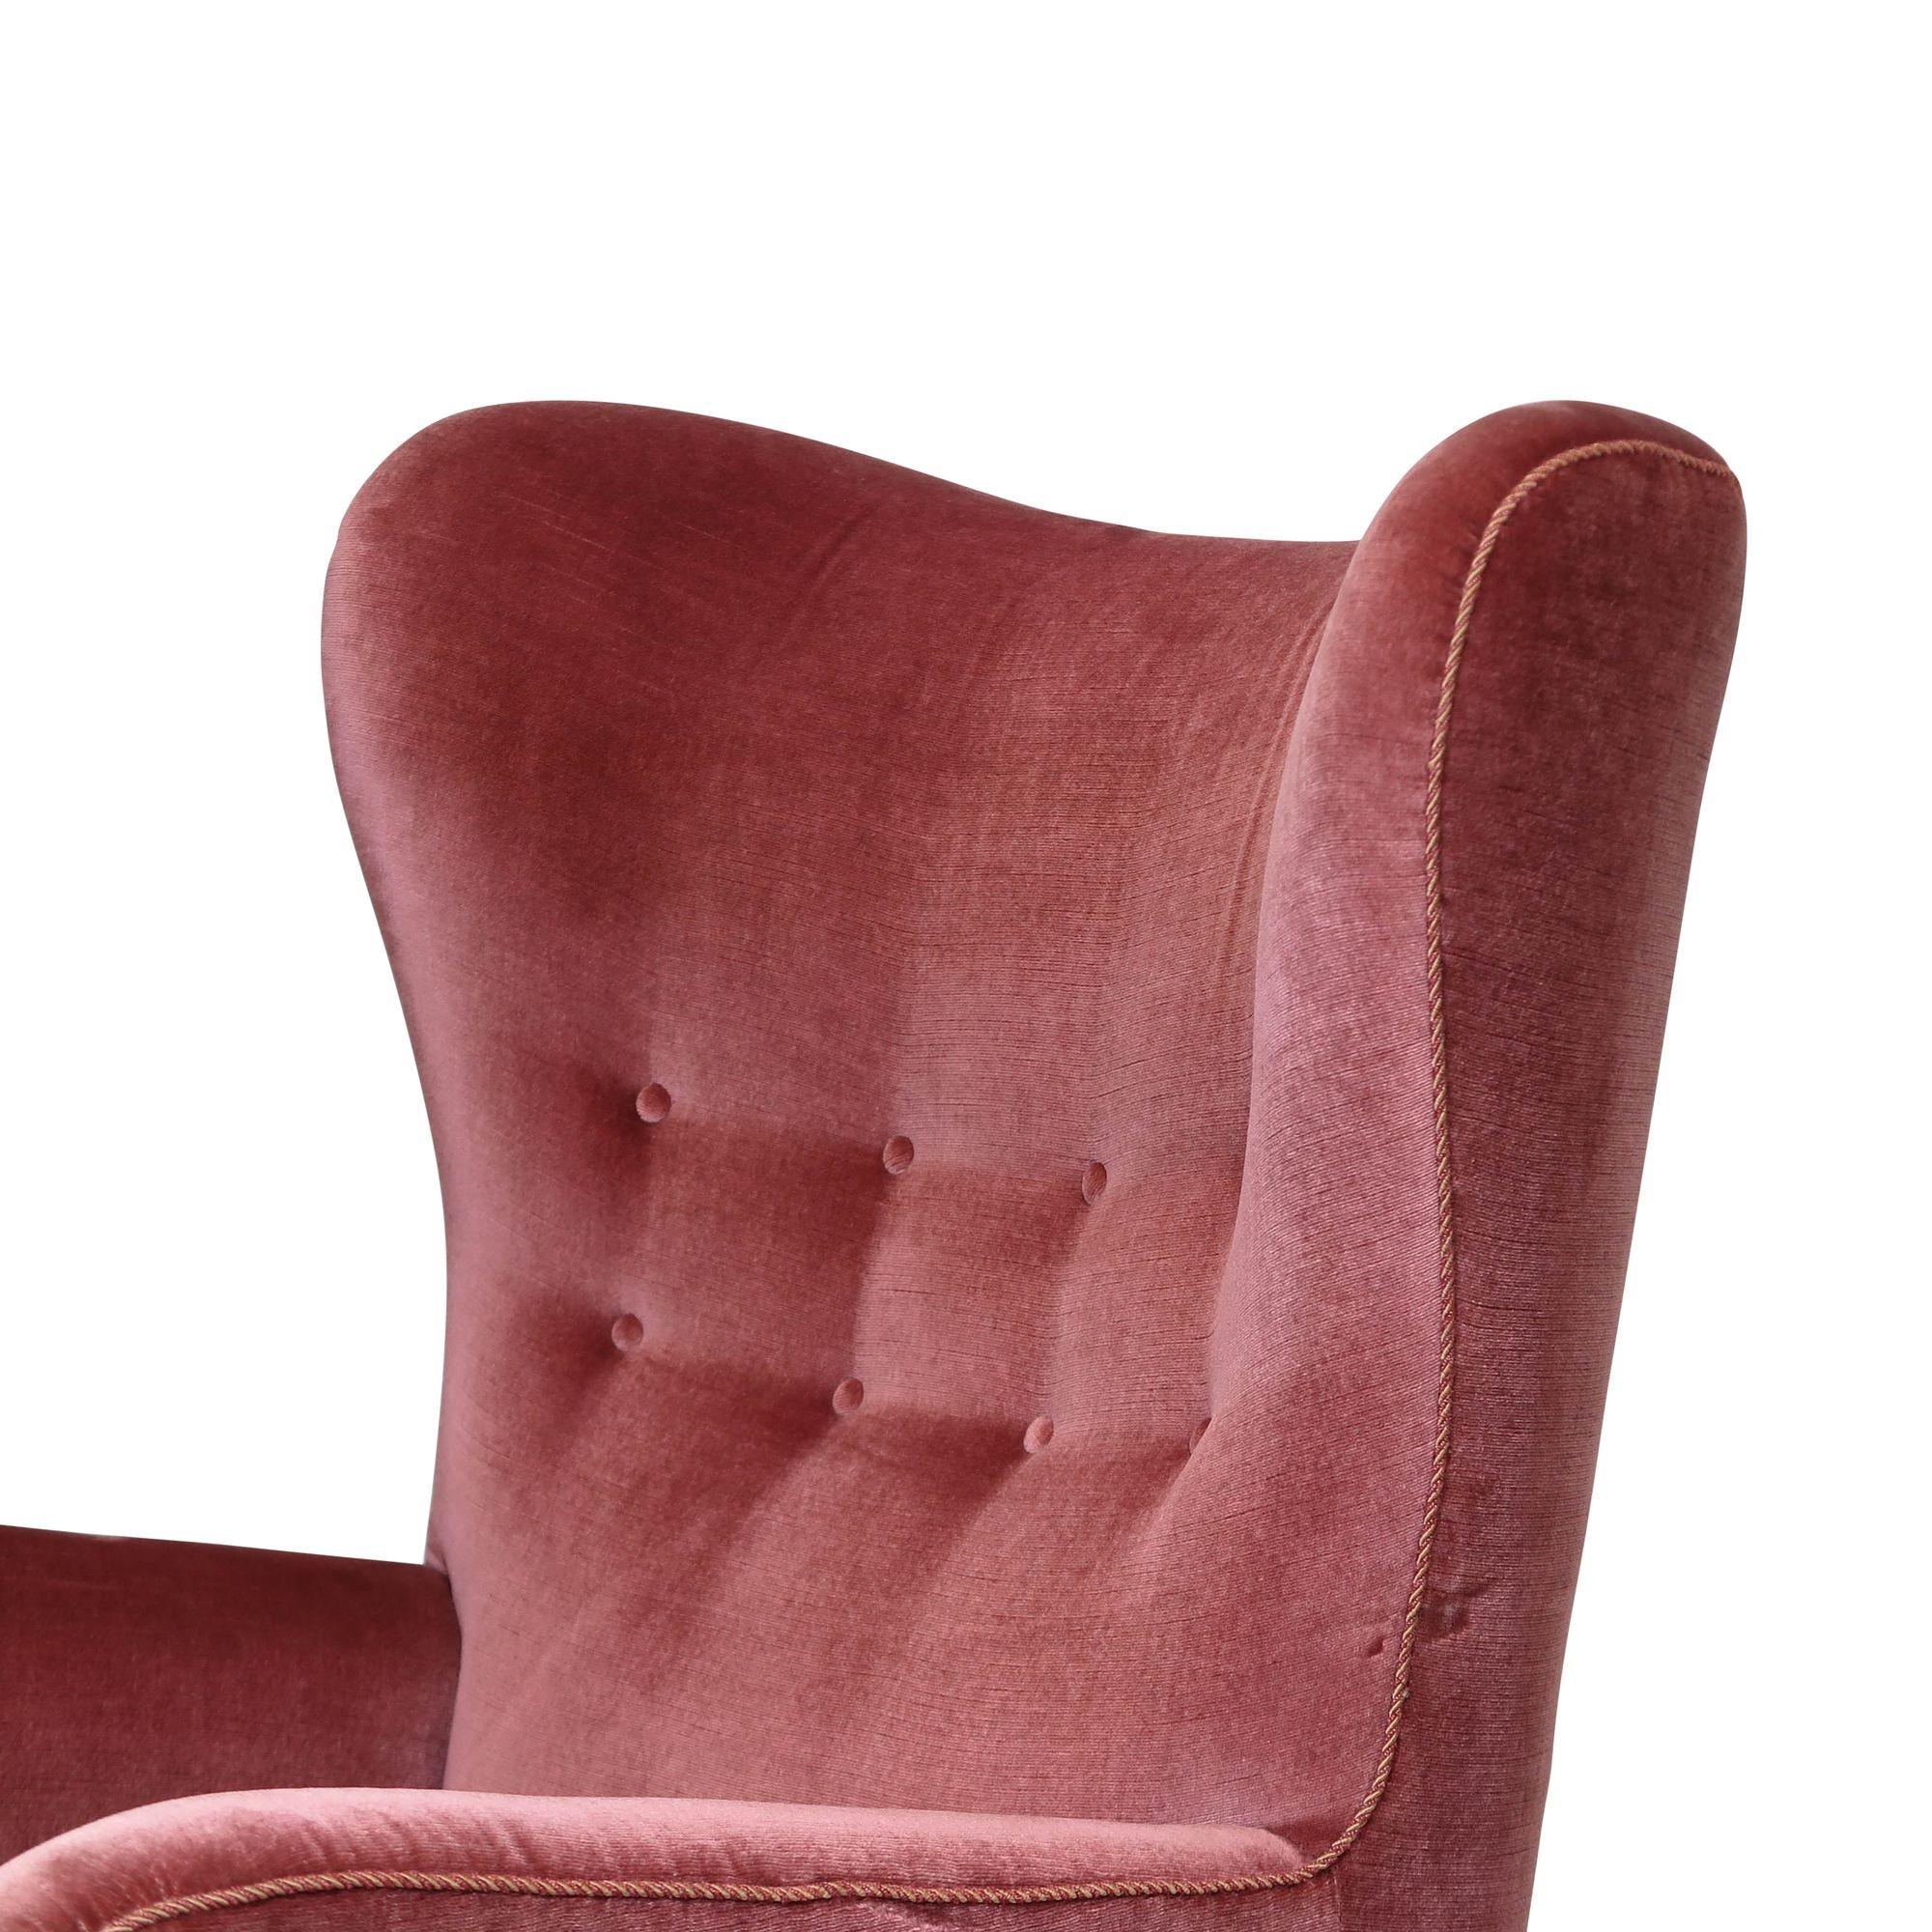 1942 Fritz Hansen High-back Lounge Chair #1672 in Original Mohair For Sale 4